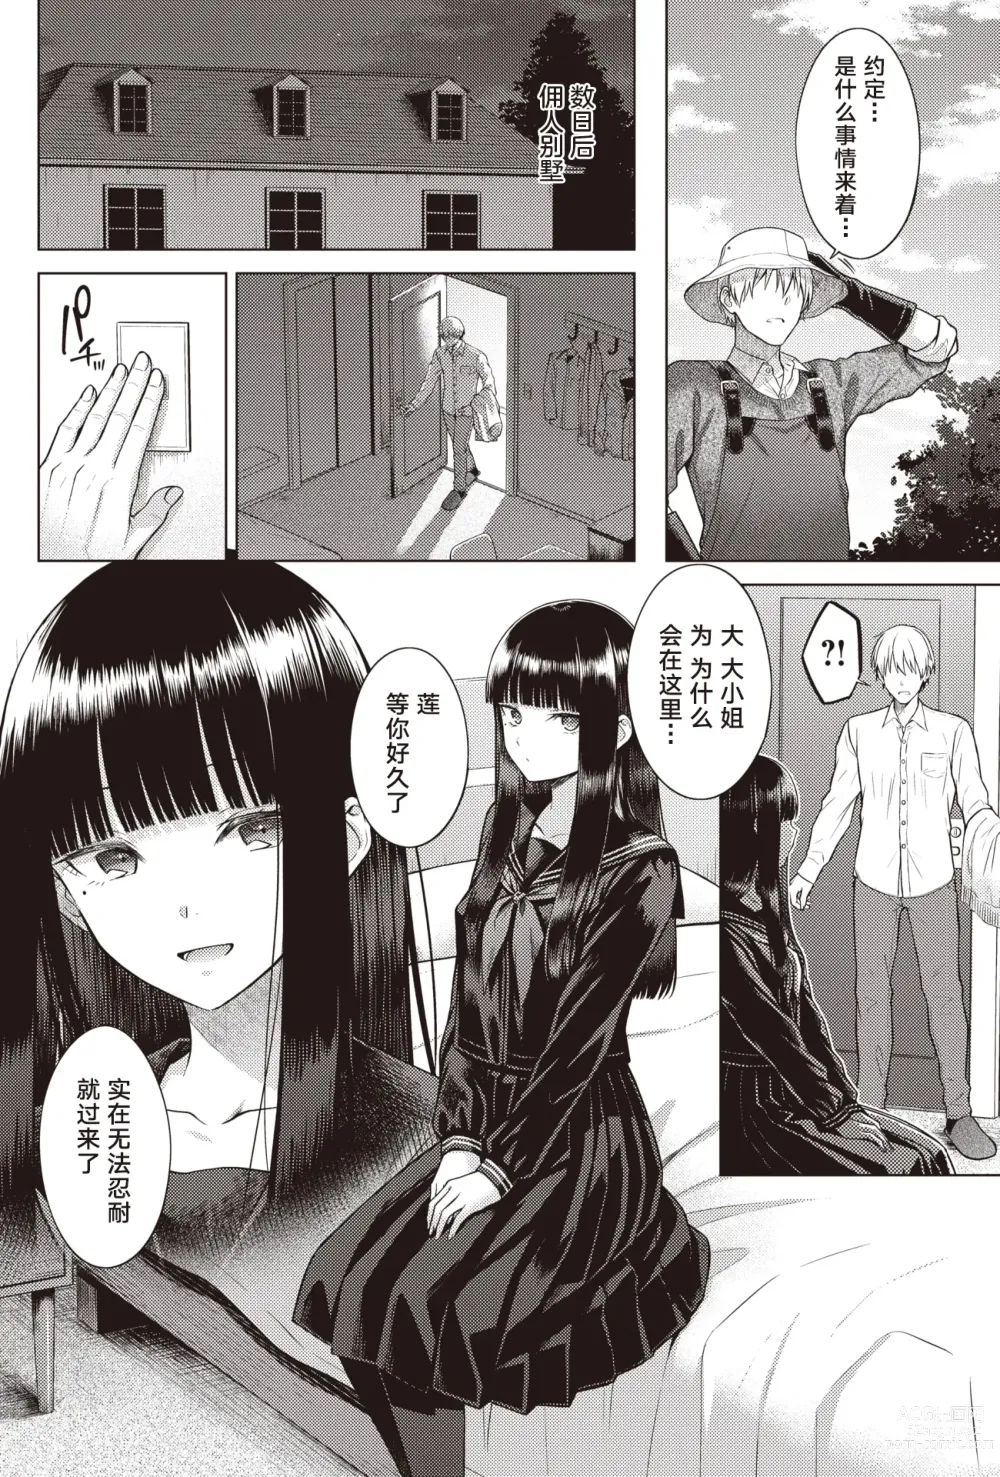 Page 6 of manga Garden of EDEN